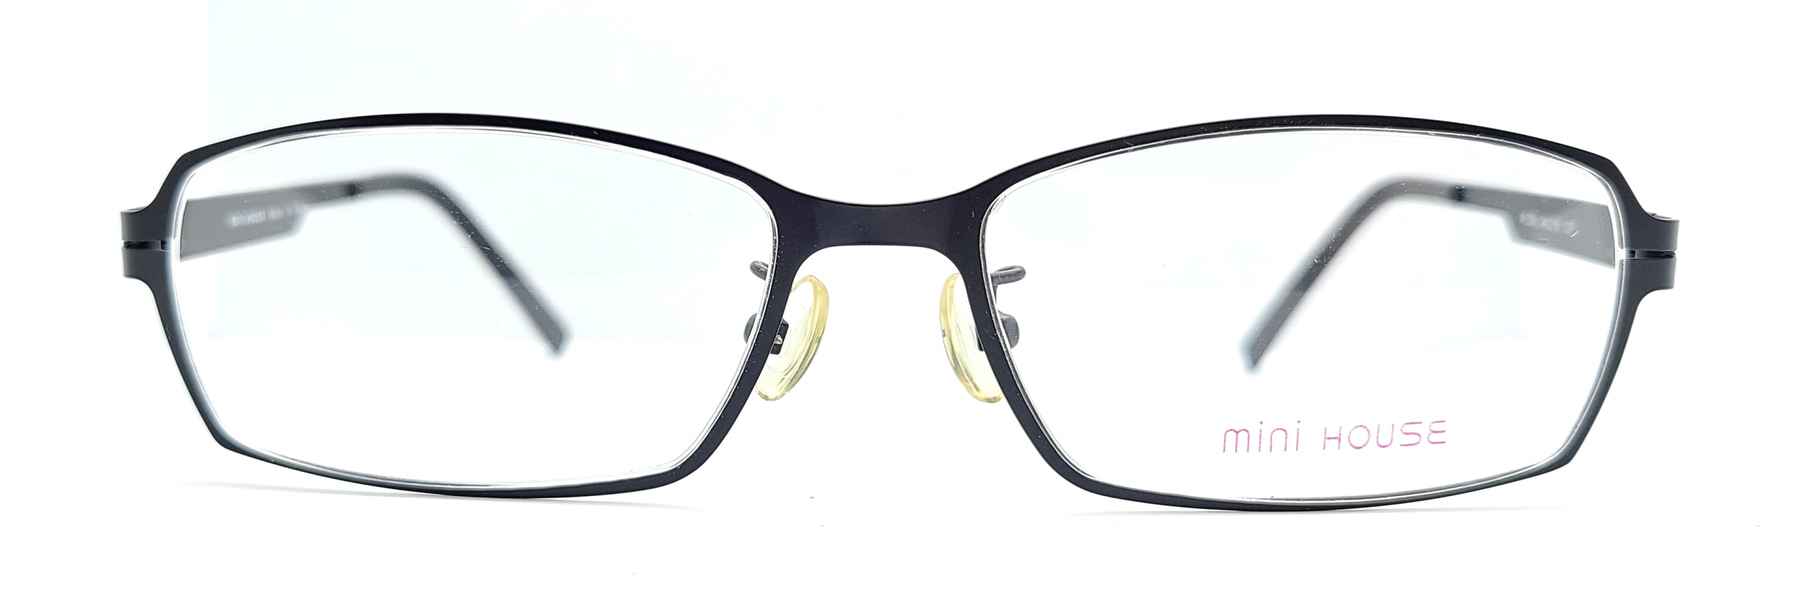 MINIHOUSE M-202, Korean glasses, sunglasses, eyeglasses, glasses